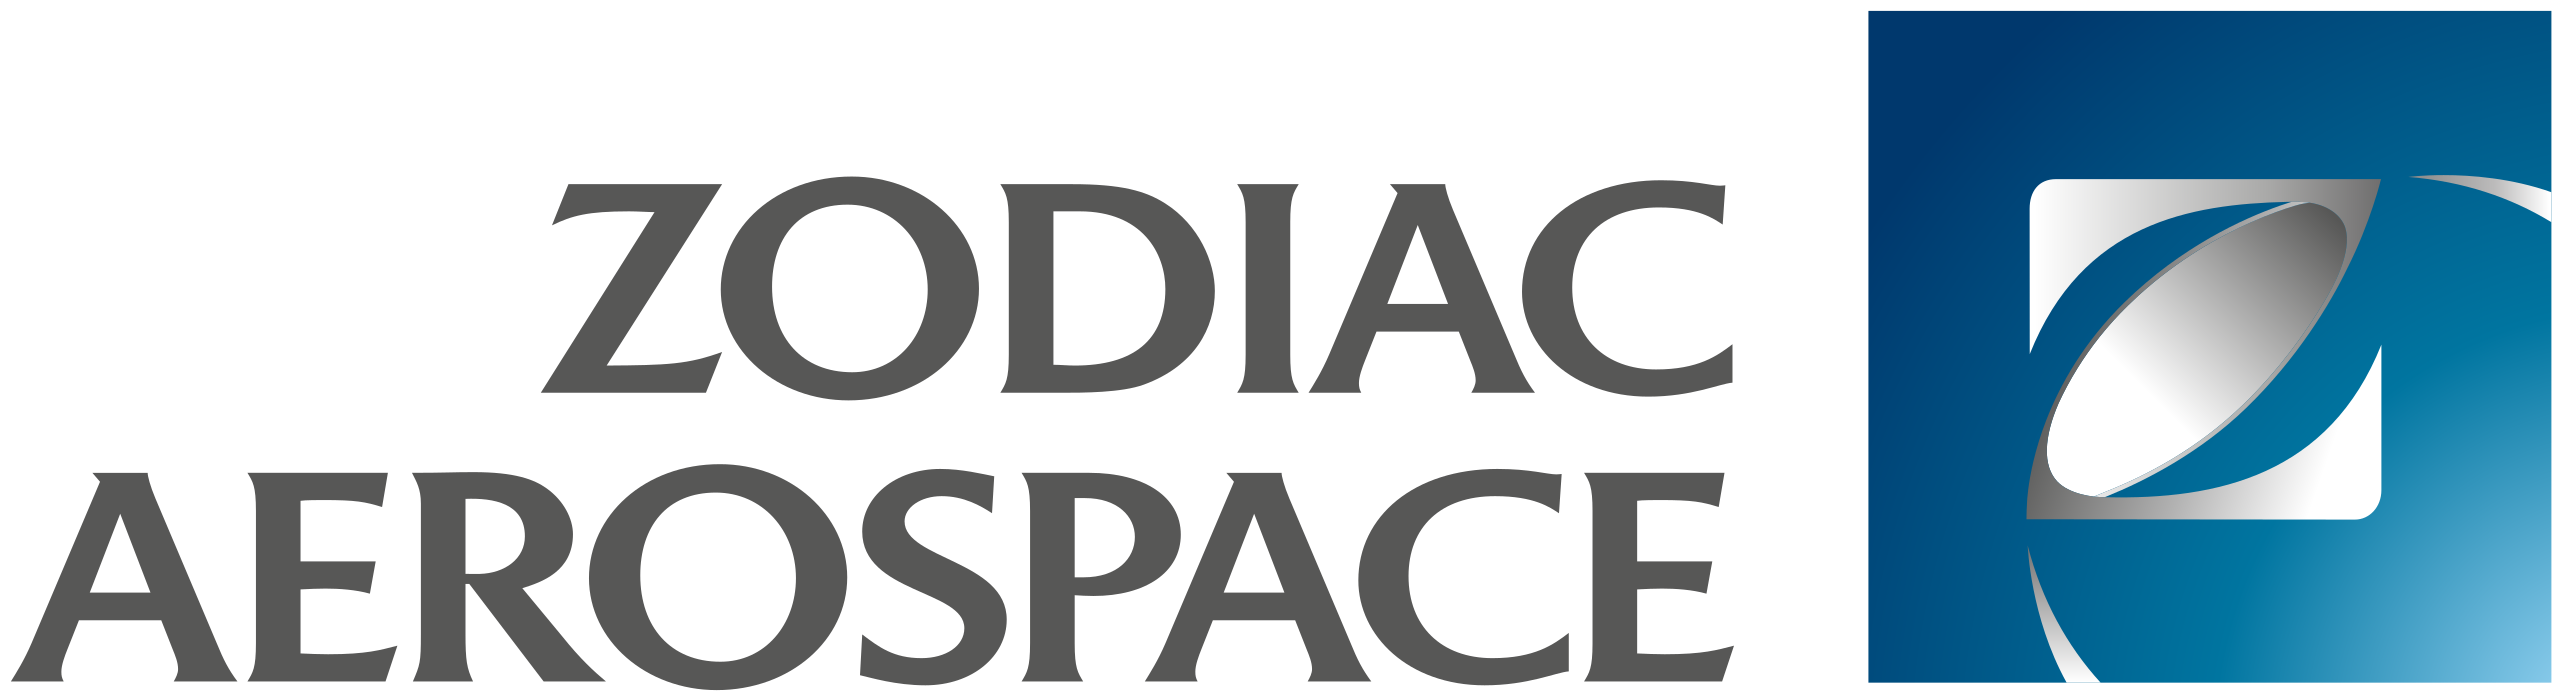 2560px-Zodiac_Aerospace_logo.svg.png